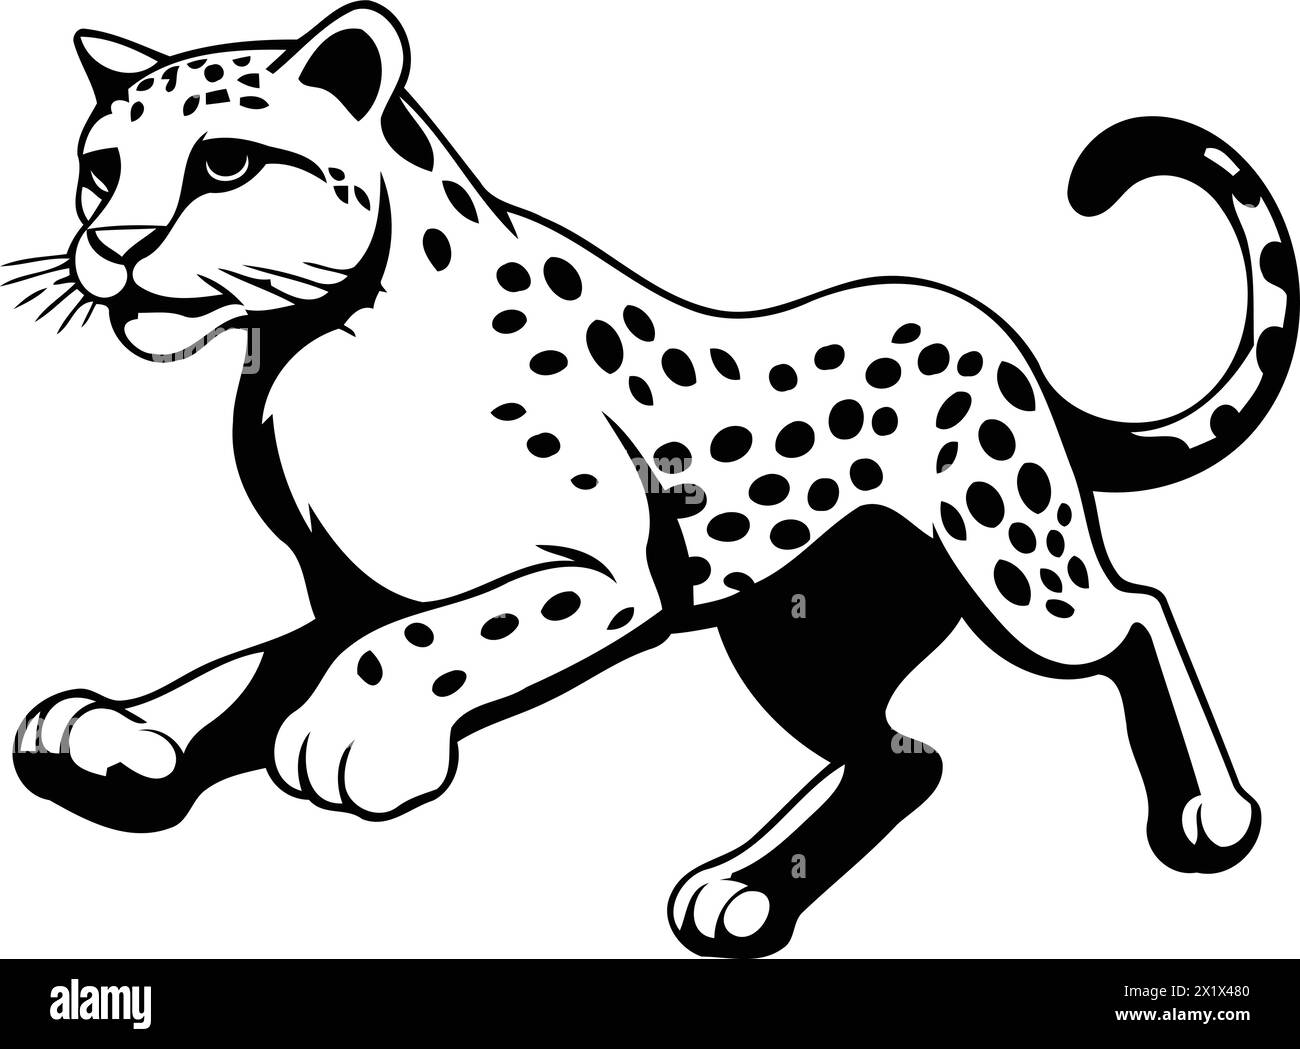 Cheetah running. Vector illustration of a cheetah. Stock Vector